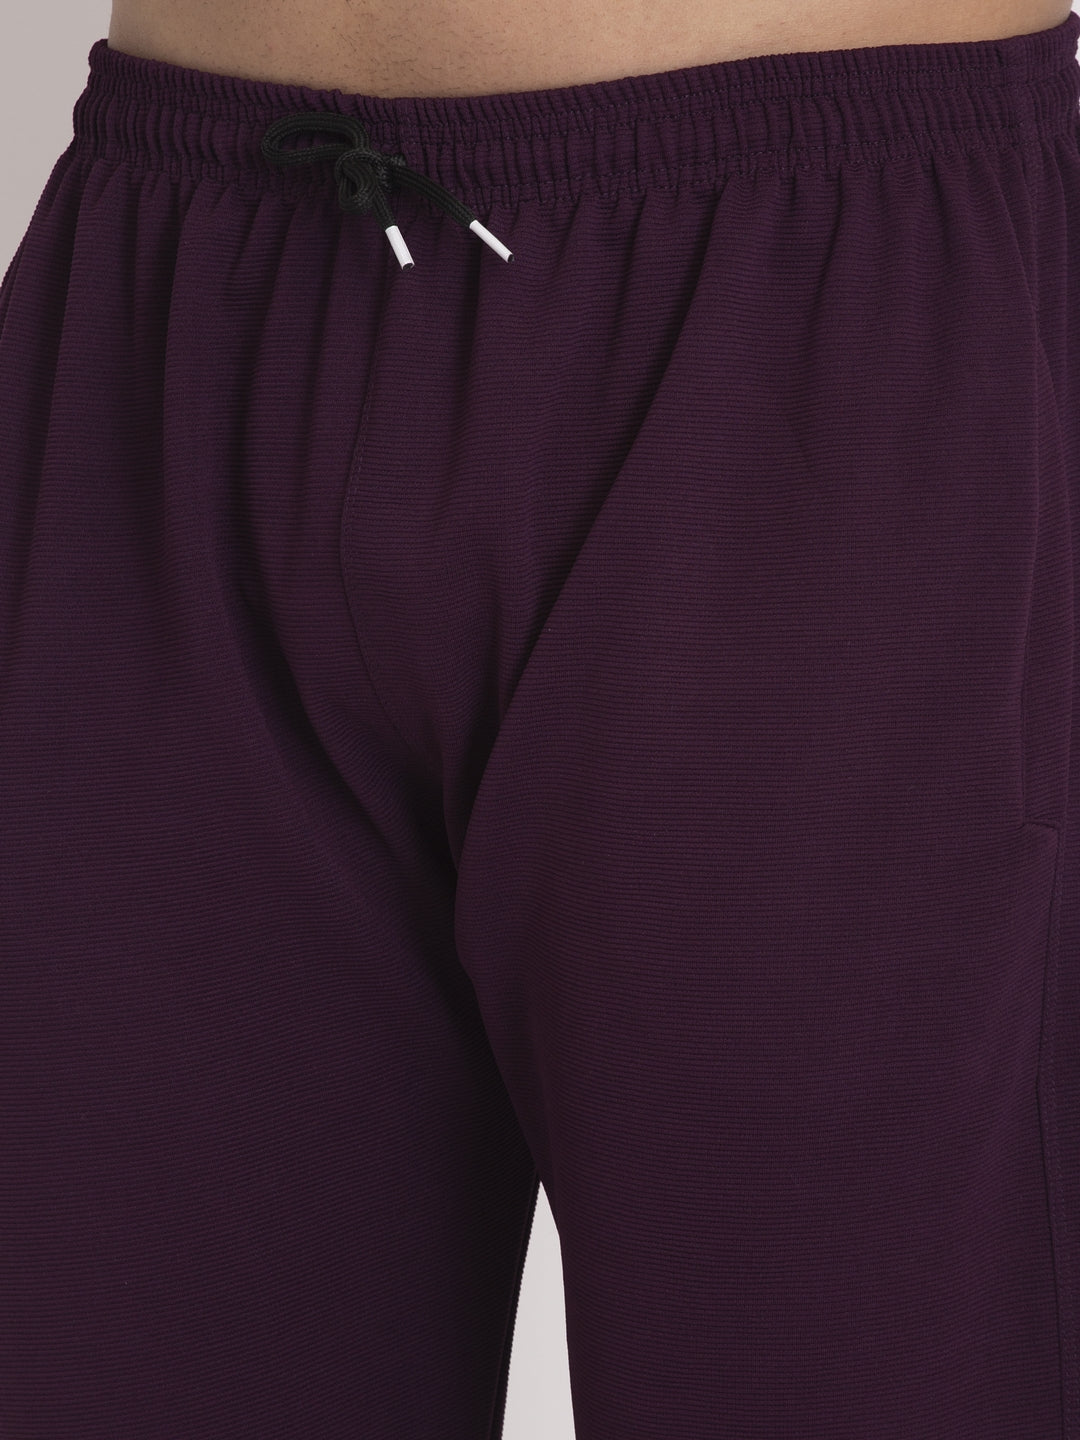 Jainish Men's Purple Solid Track Pants